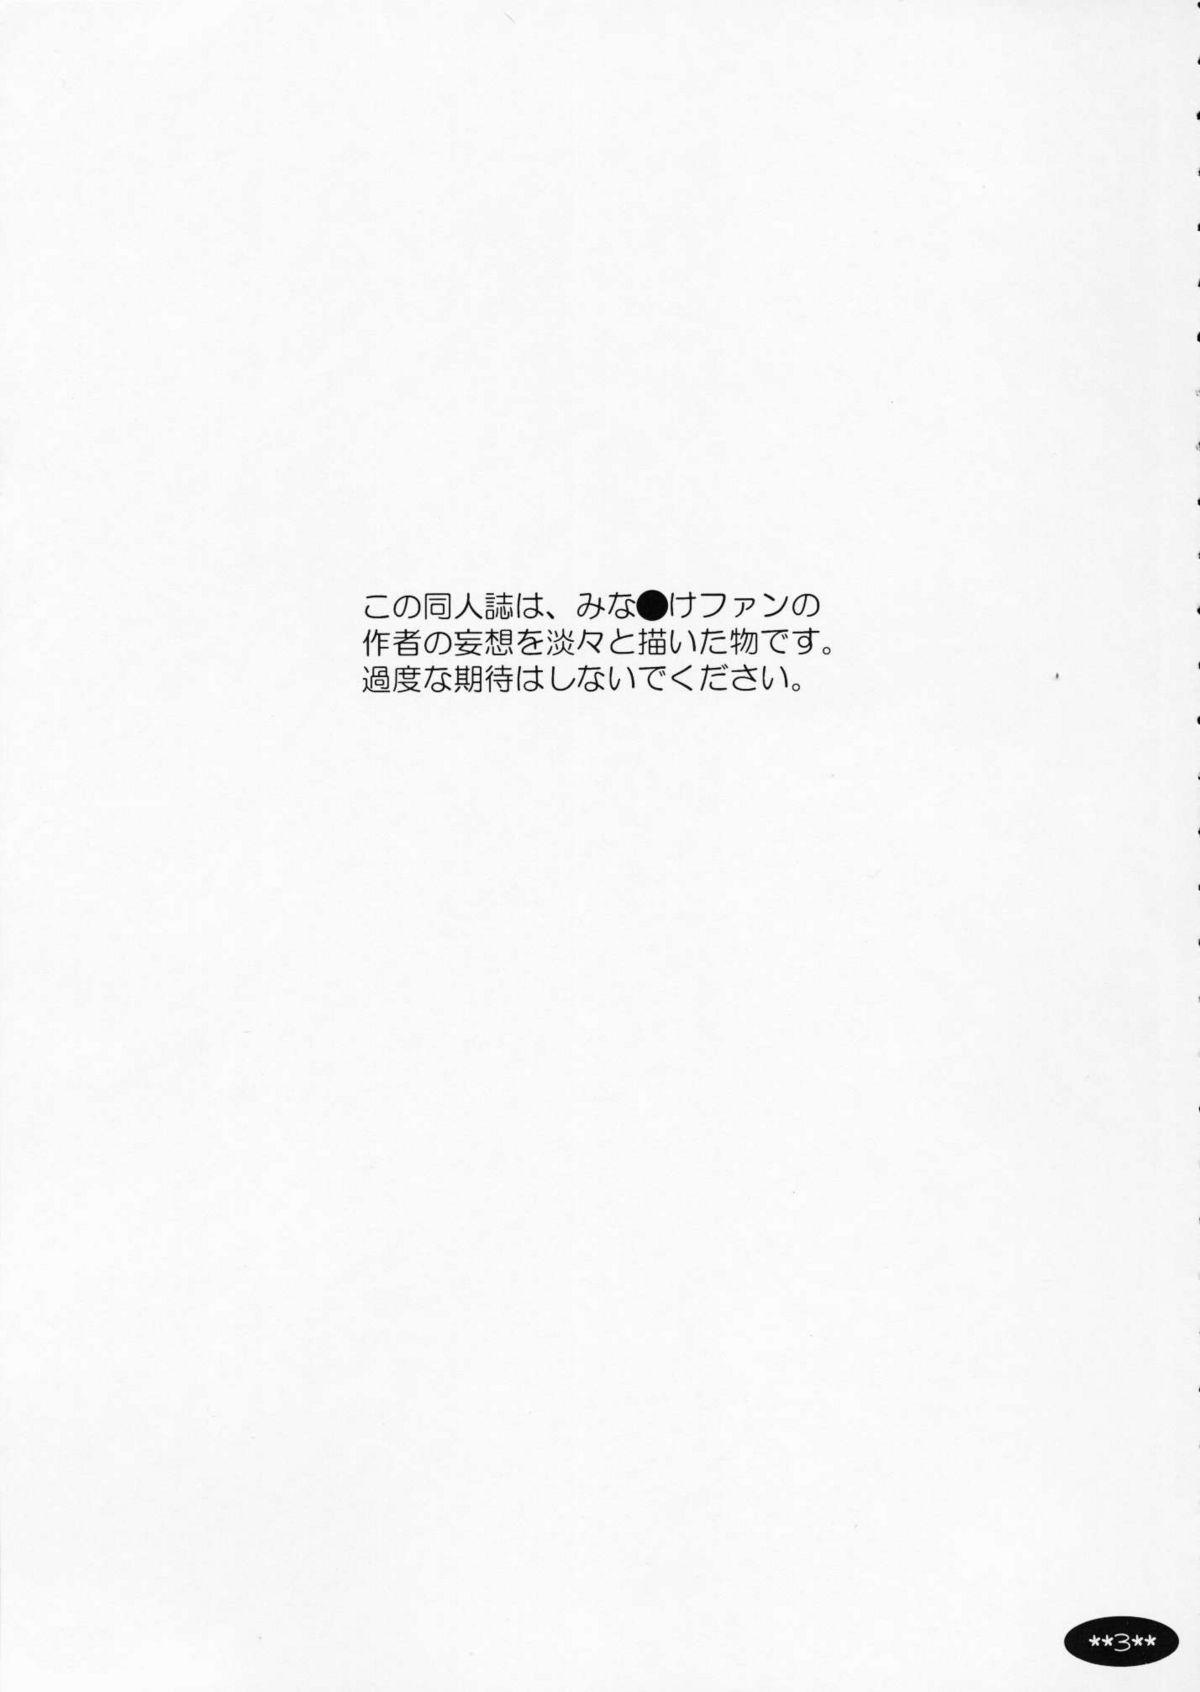 Passion Haru no Oto - Minami-ke Sister - Page 3